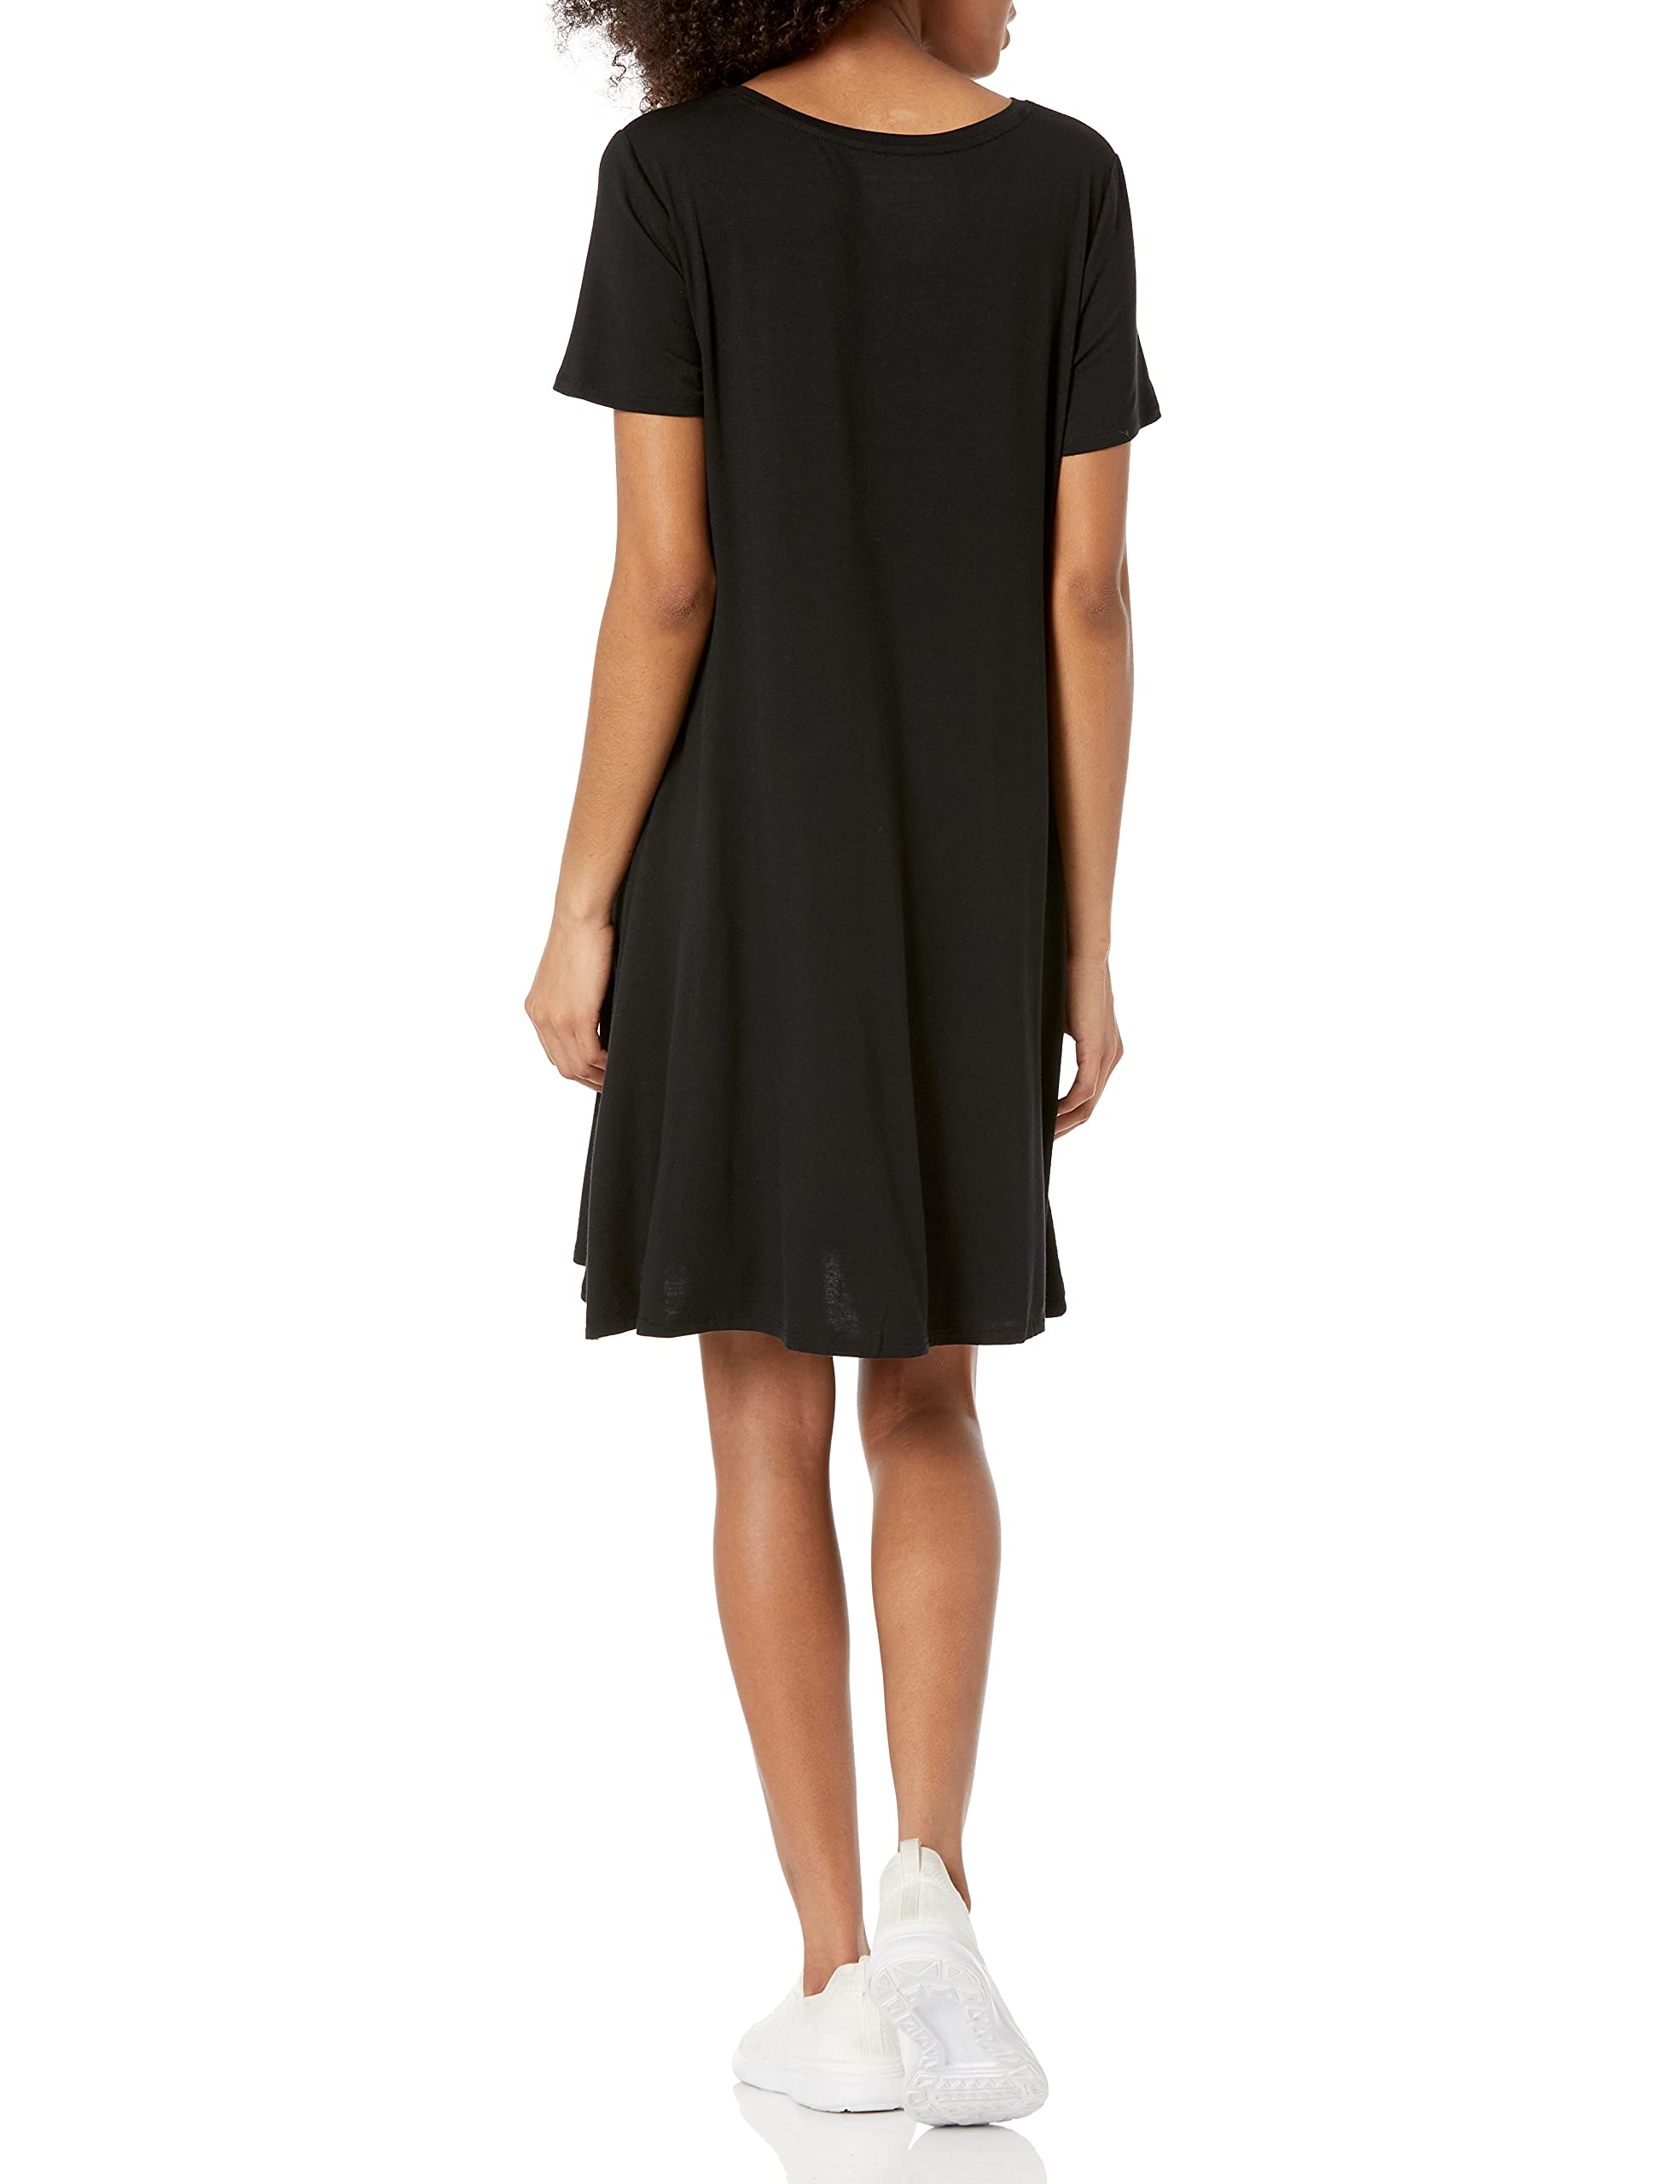 Amazon Essentials Women's Standard Short-Sleeve V-Neck Swing Dress